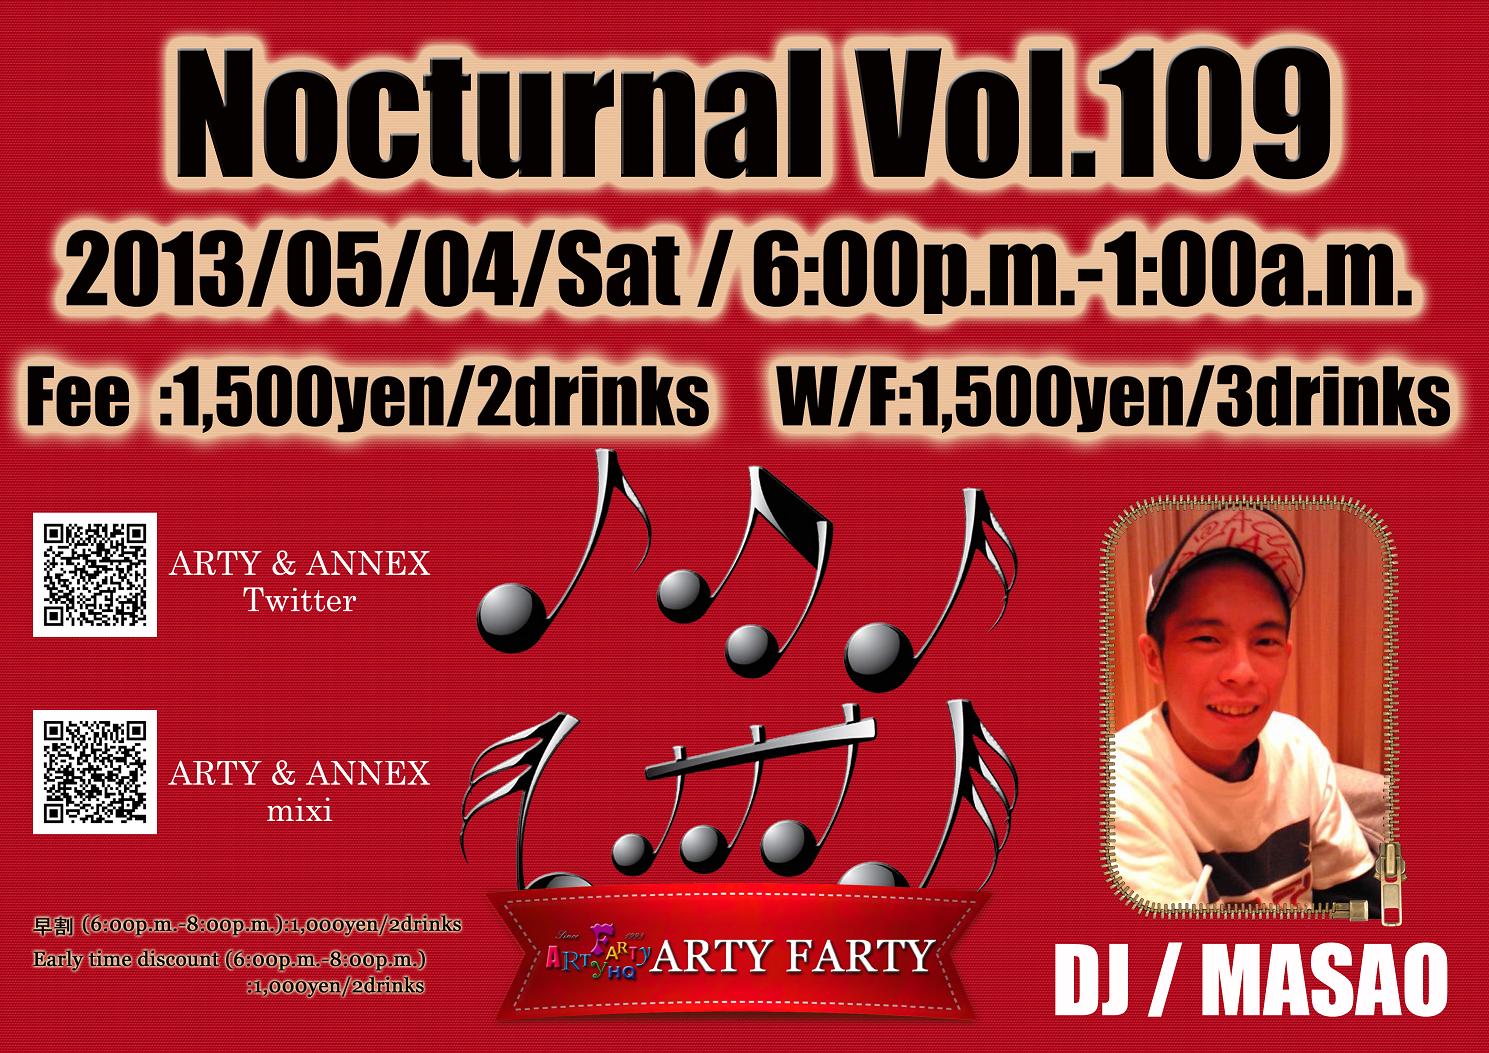 Nocturnal Vol.109   2013/05/04 1489x1053 351.9kb